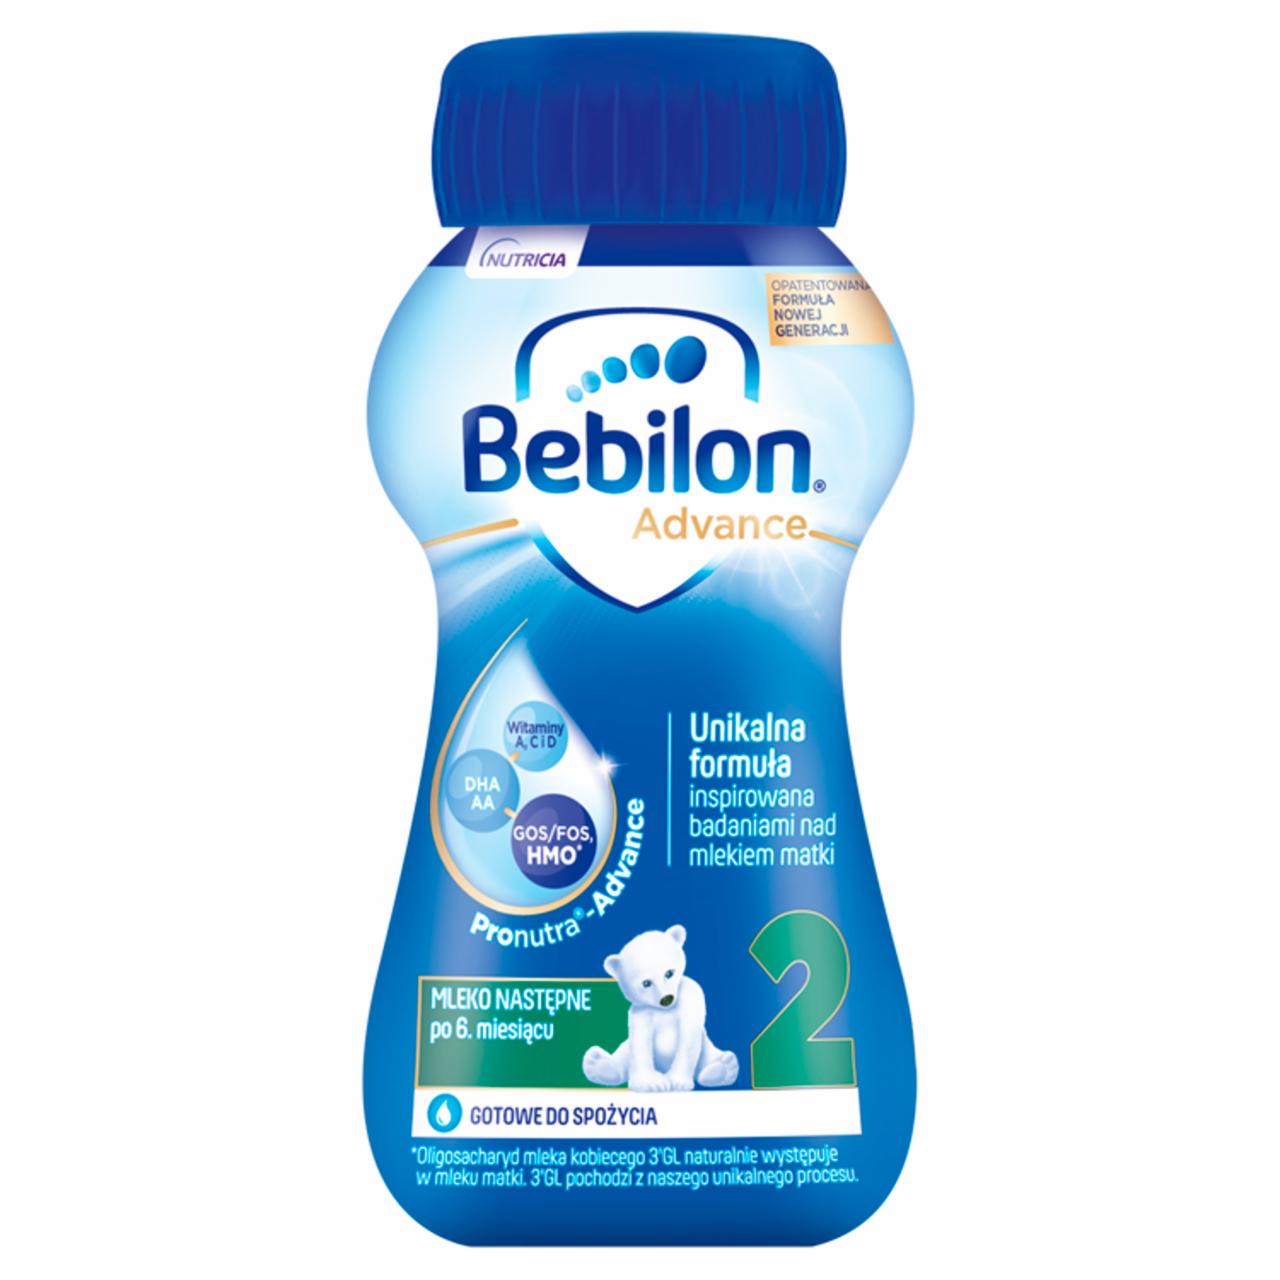 Zdjęcia - Bebilon 2 Advance Pronutra Mleko następne po 6. miesiącu 200 ml